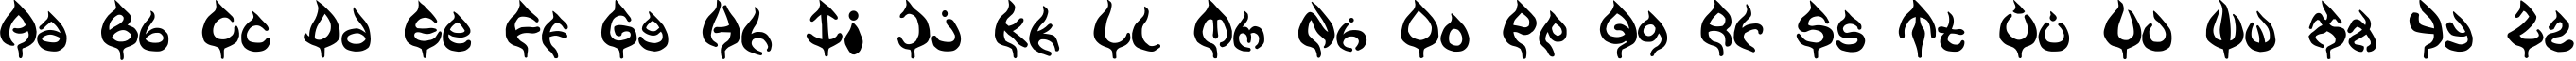 Пример написания английского алфавита шрифтом AME-